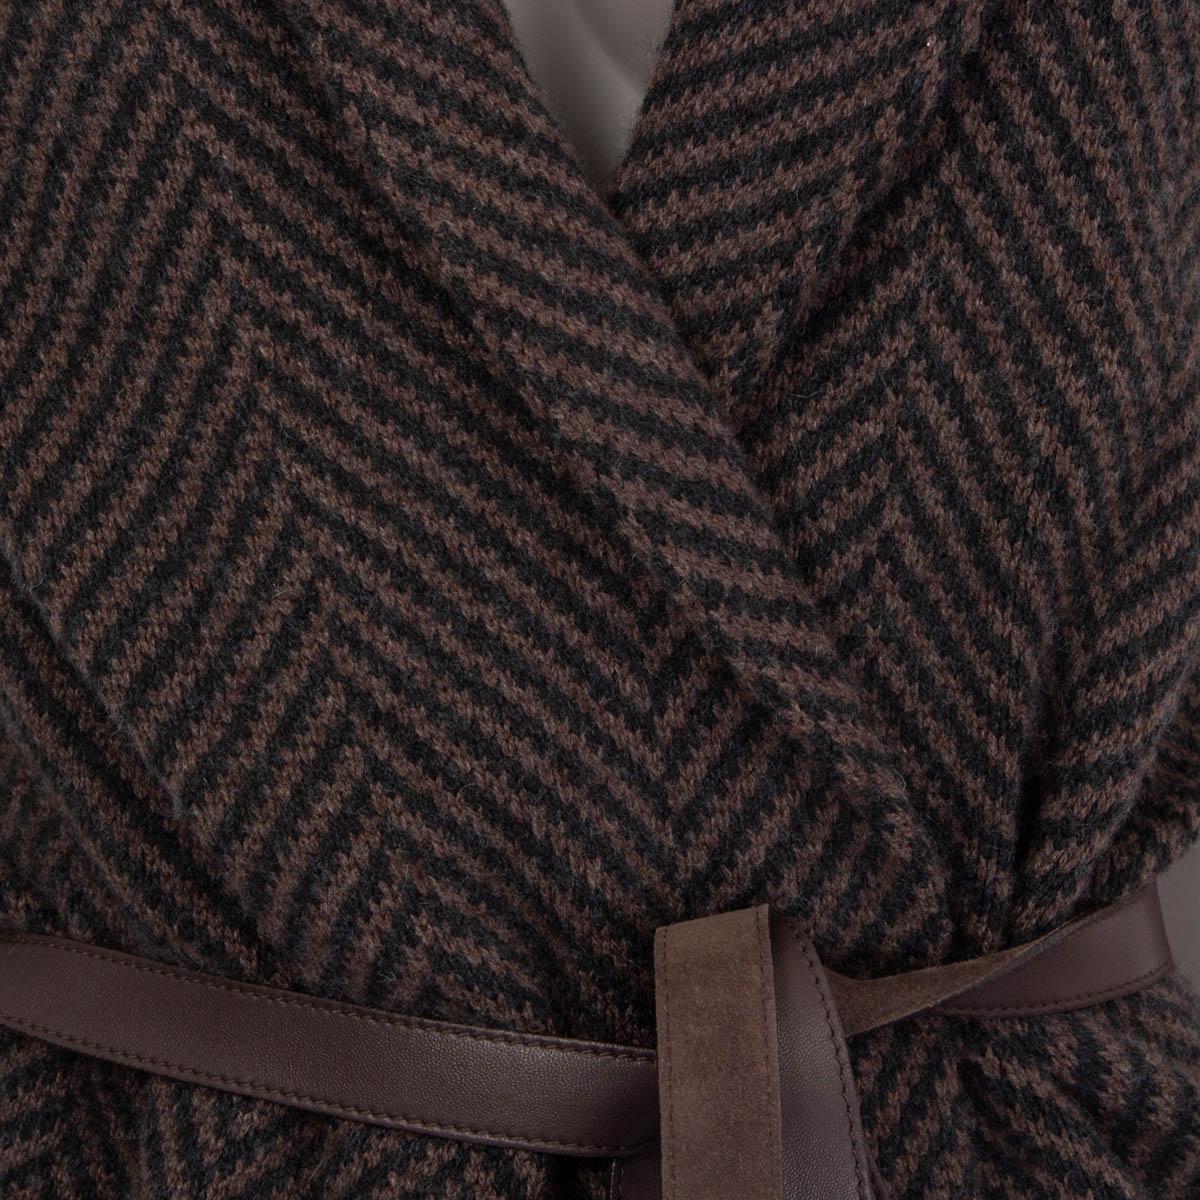 Black LORO PIANA black & brown cashmere CHEVRON BELTED Wrap Cardigan Sweater 38 XS For Sale